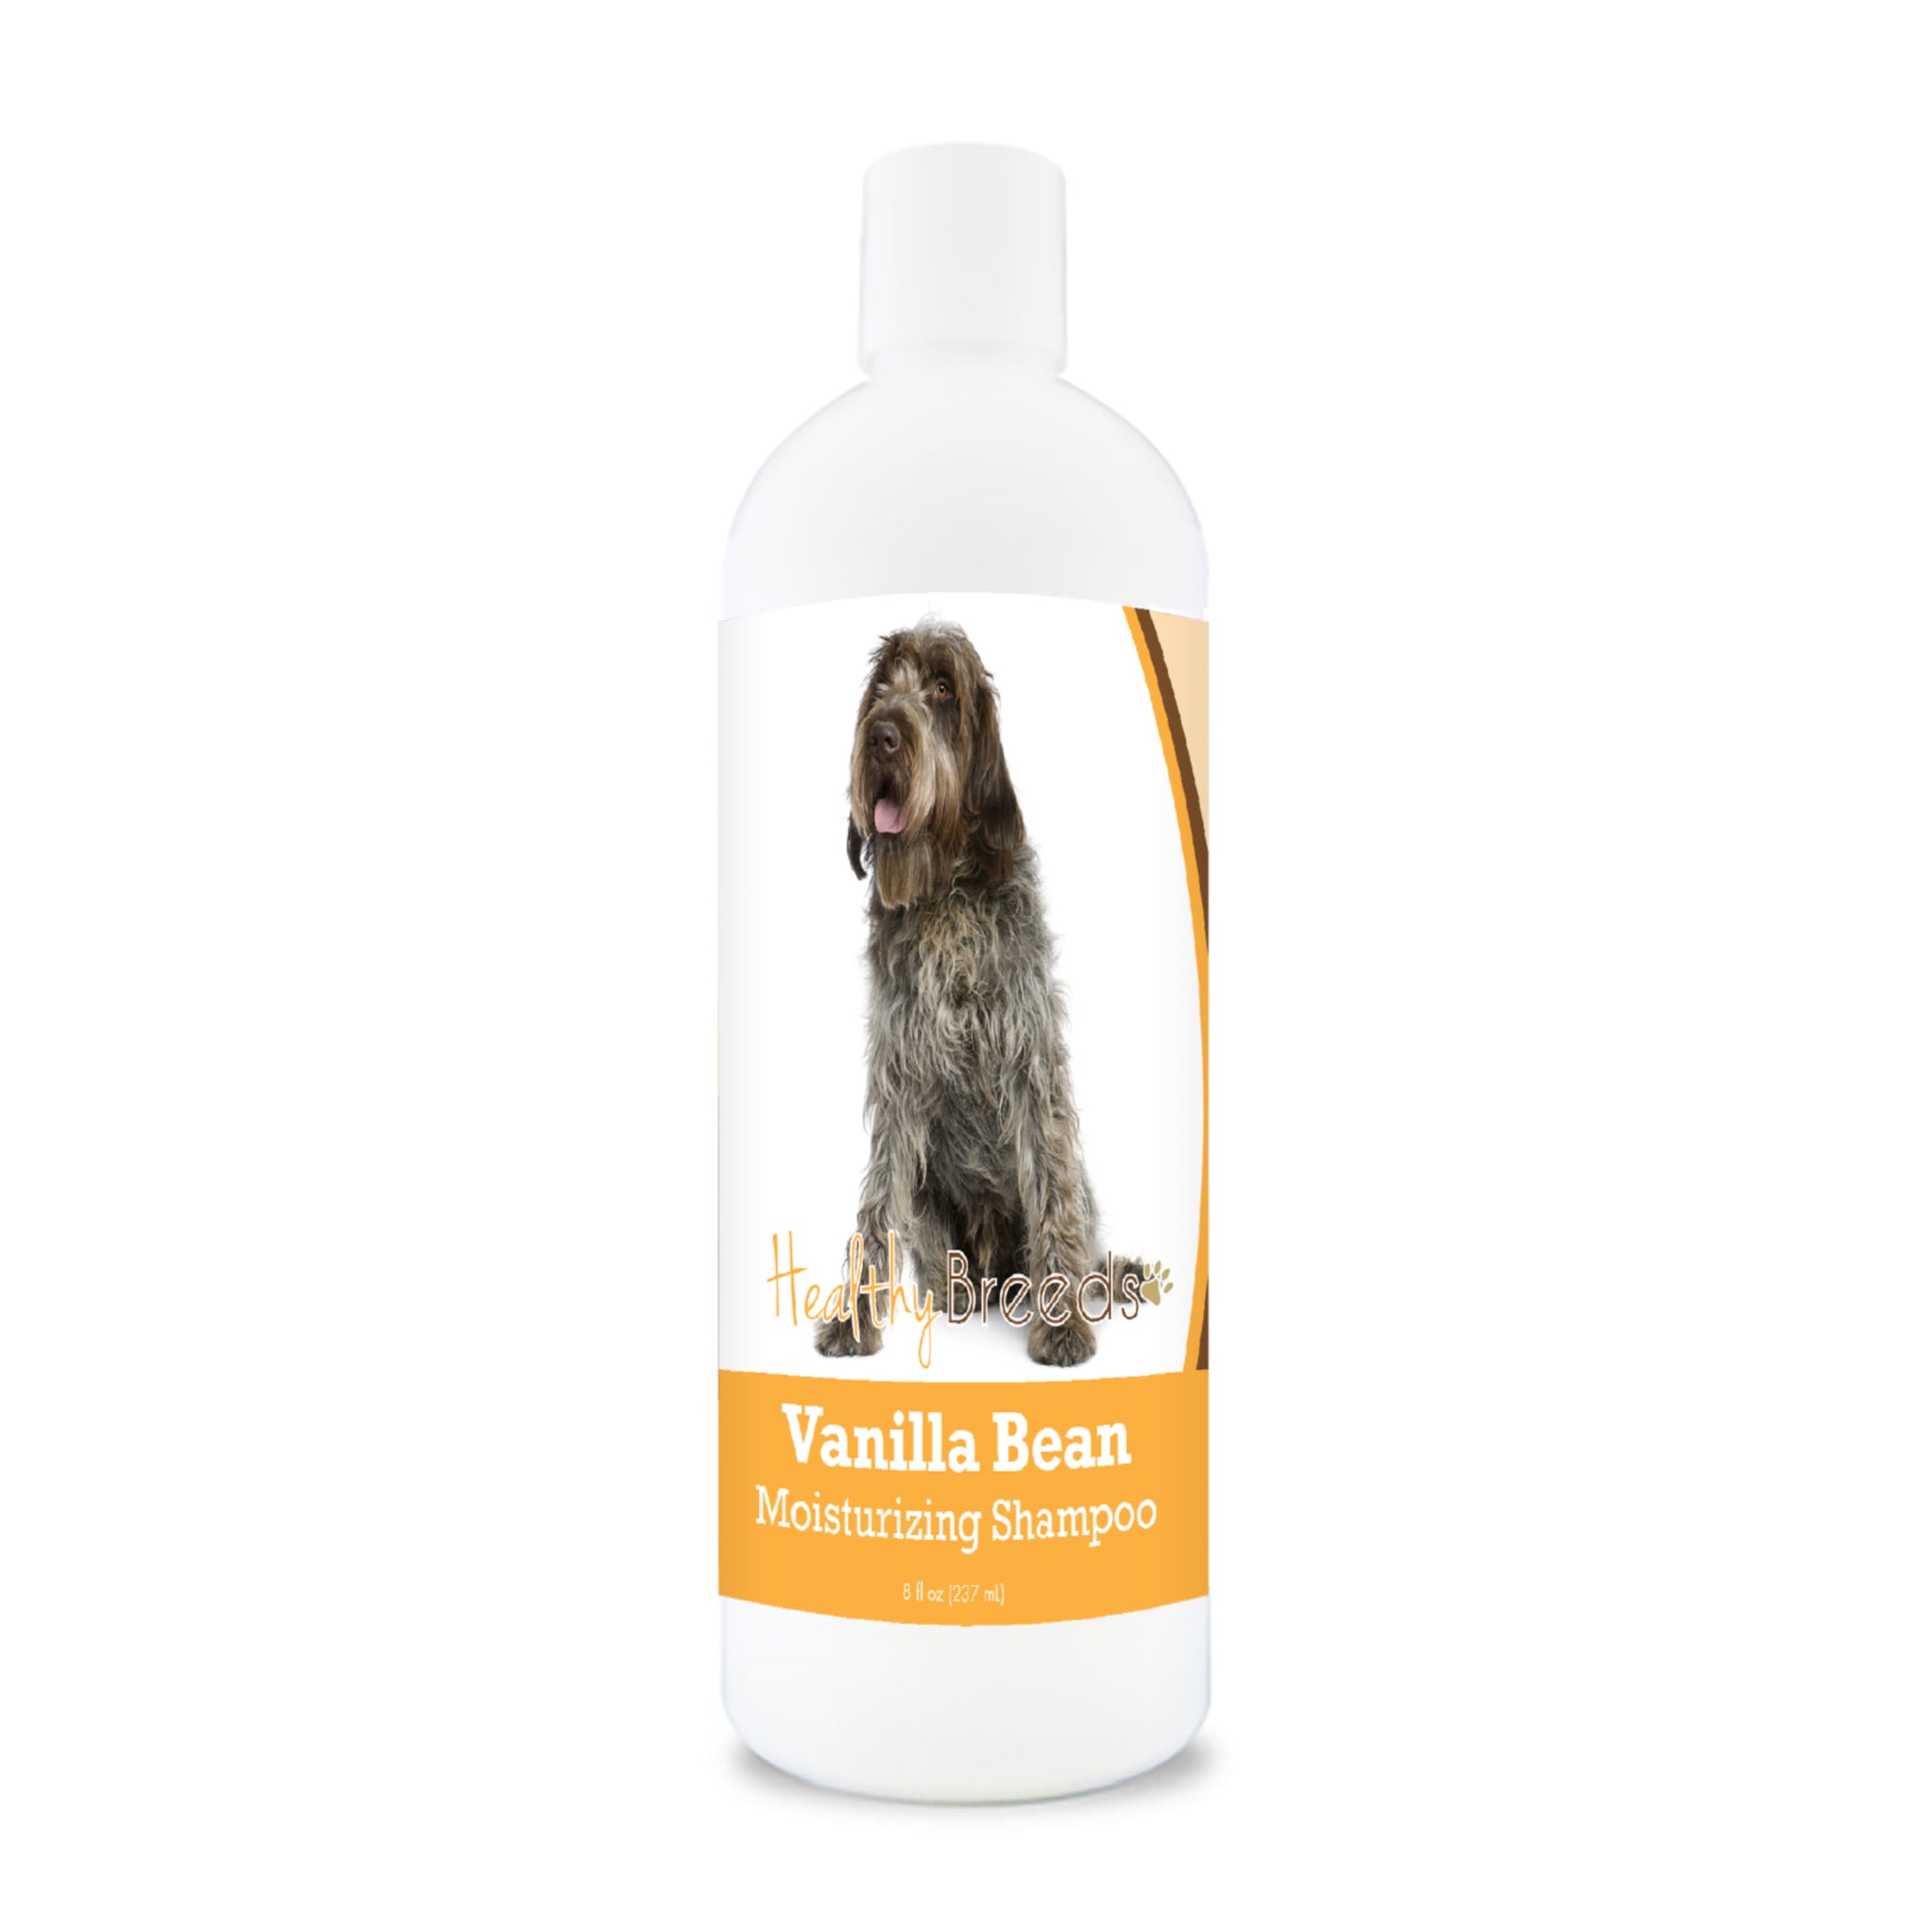 Wirehaired Pointing Griffon Vanilla Bean Moisturizing Shampoo 8 oz